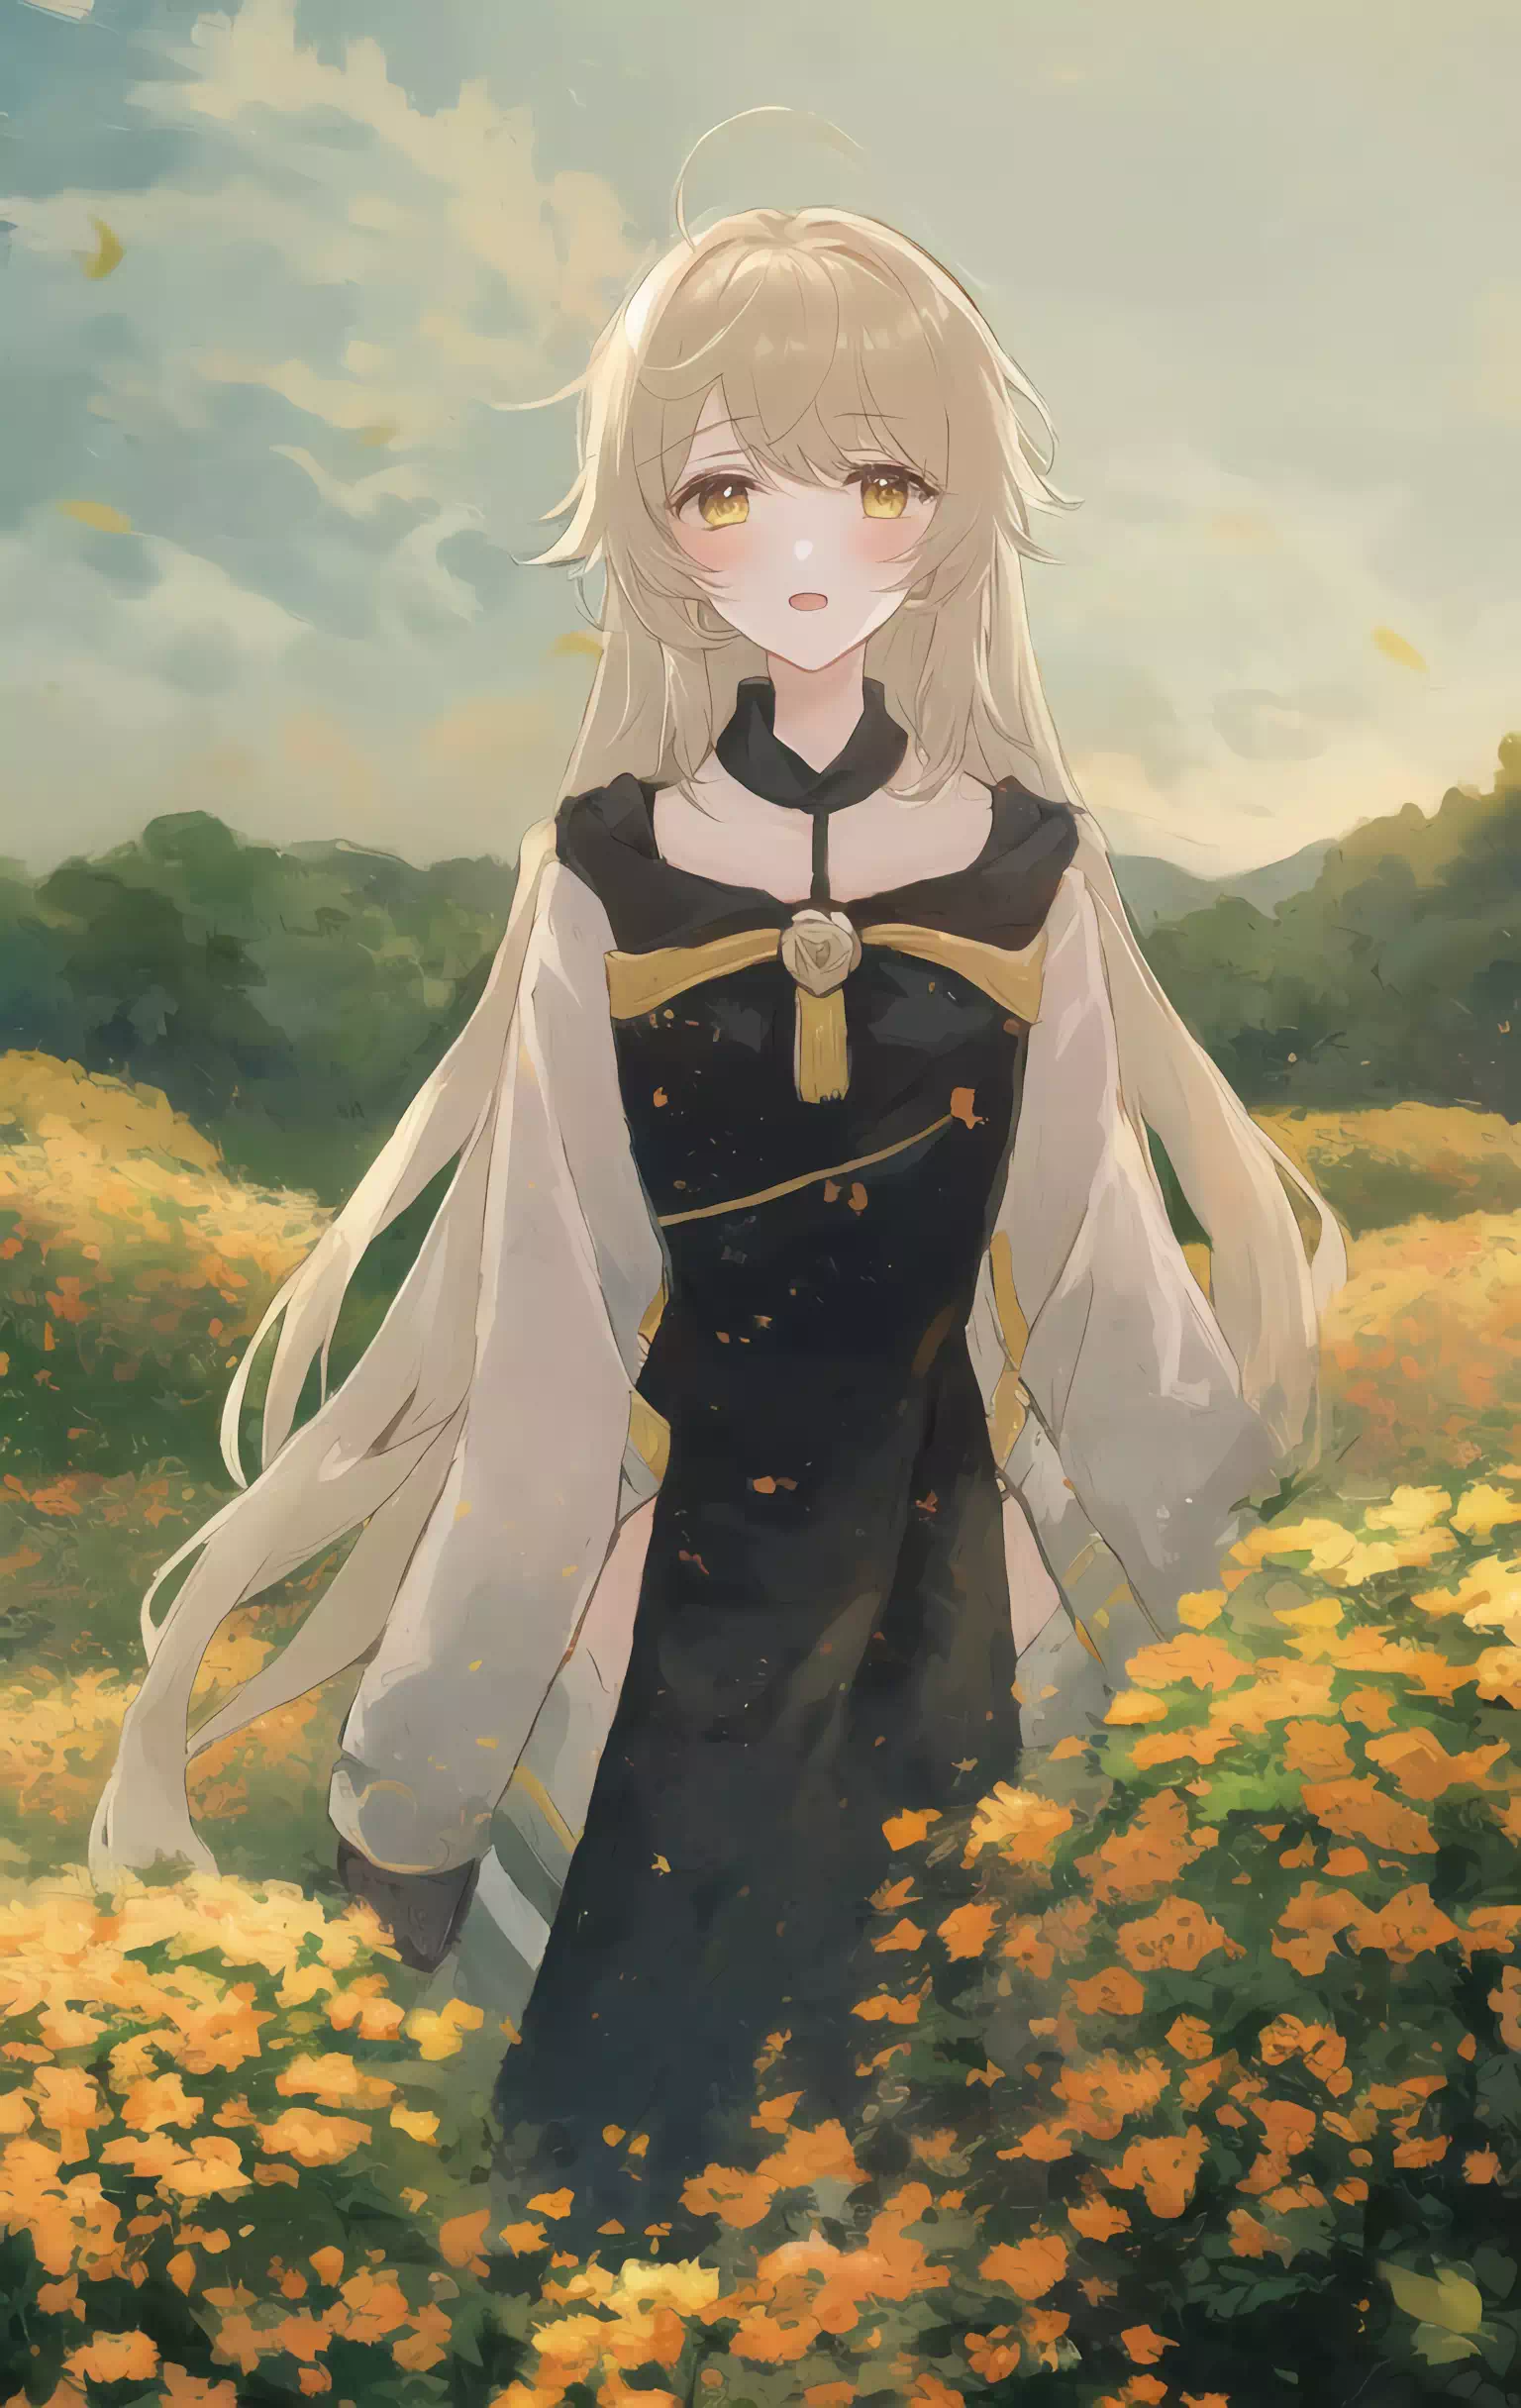 A girl in flowers